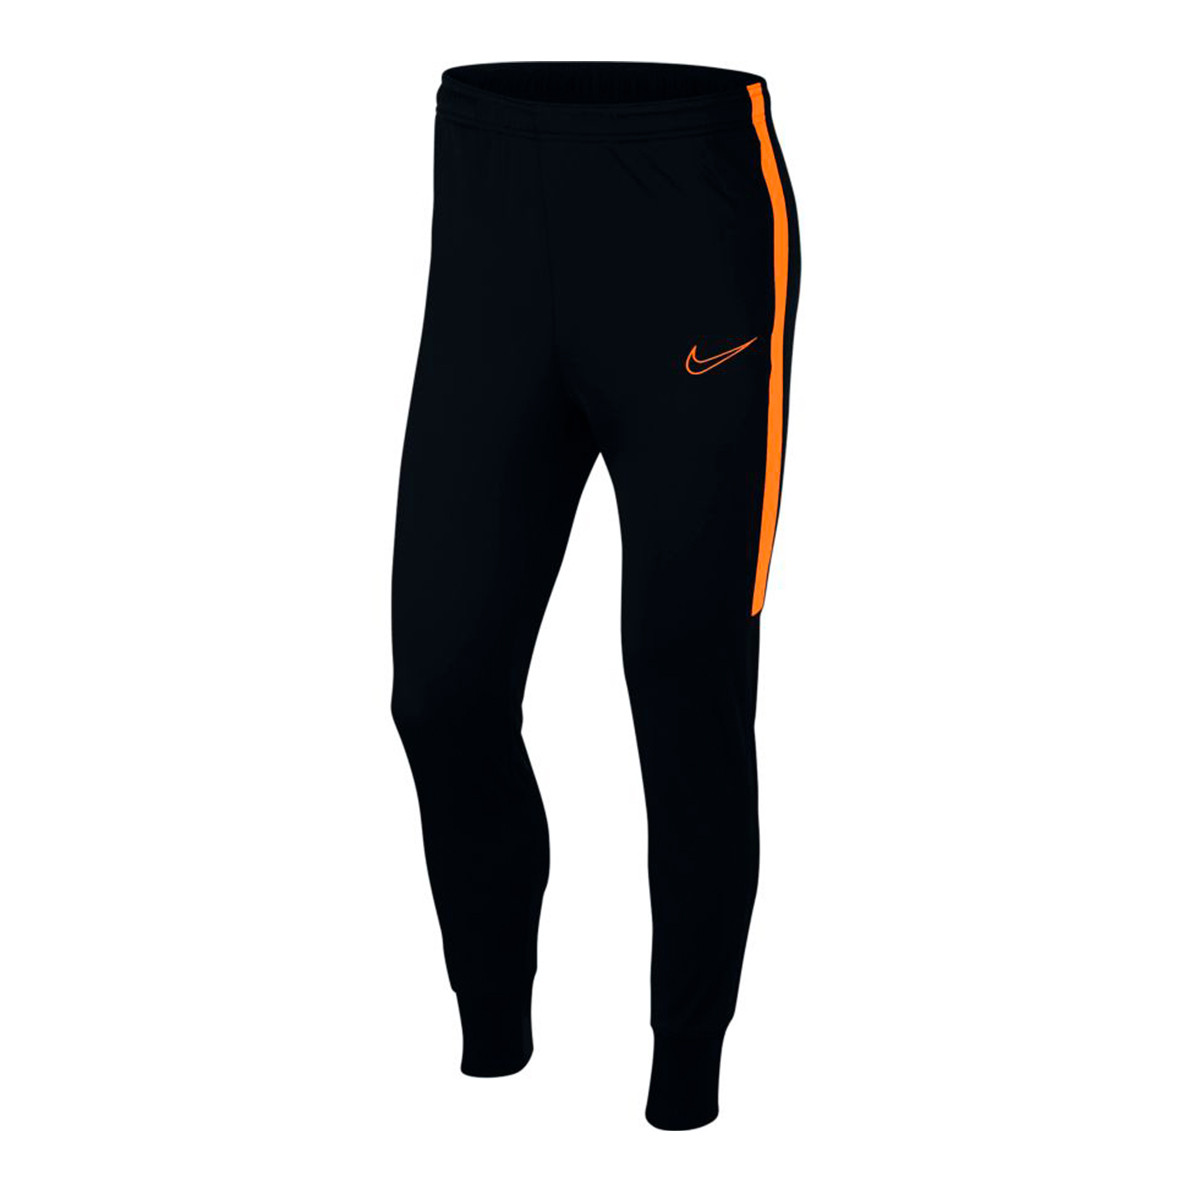 black and orange nike pants